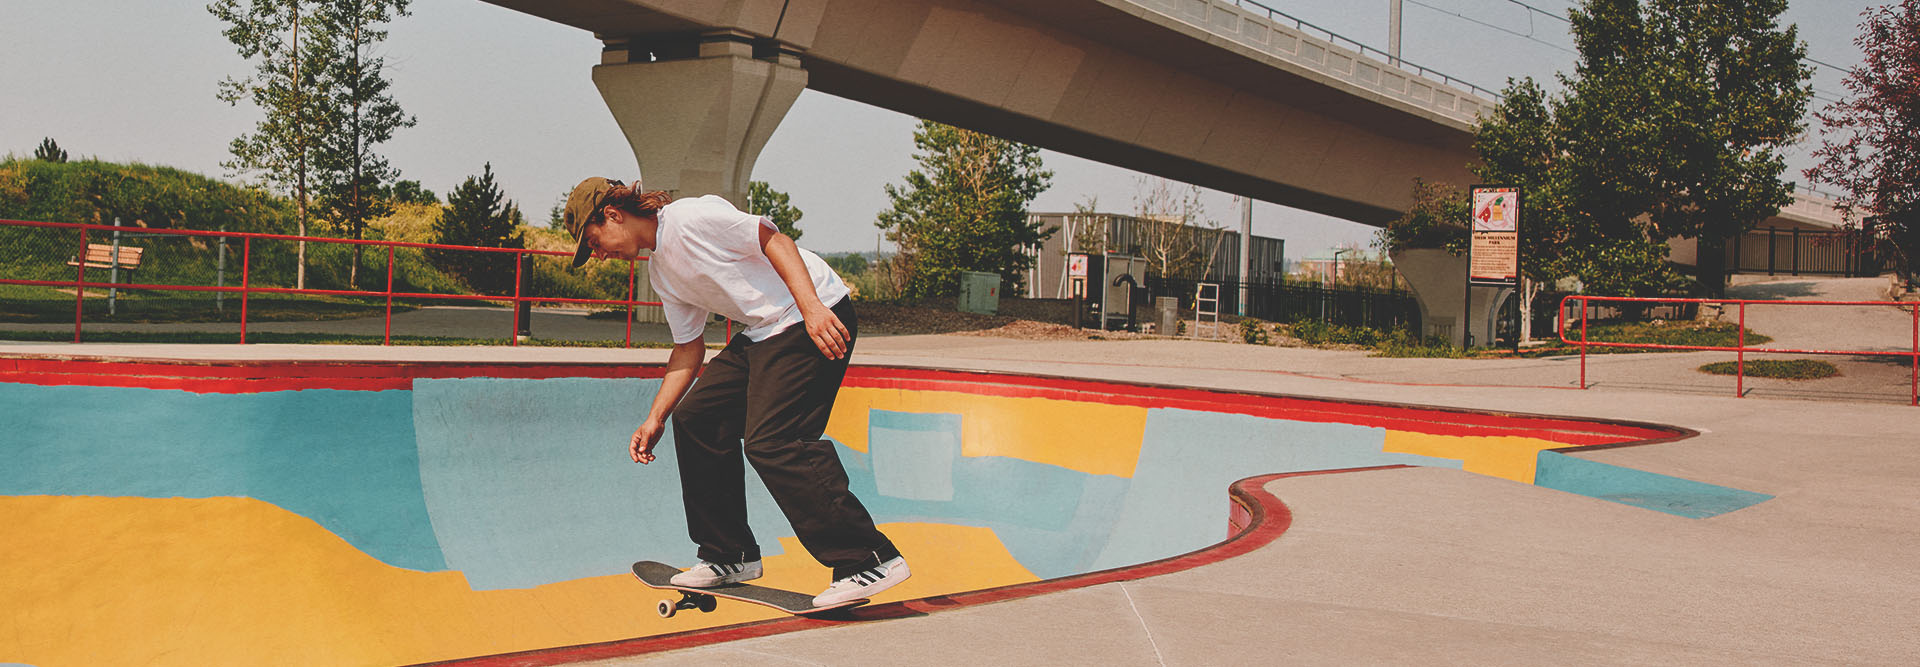 Person skateboarding at Shaw Millennium Park